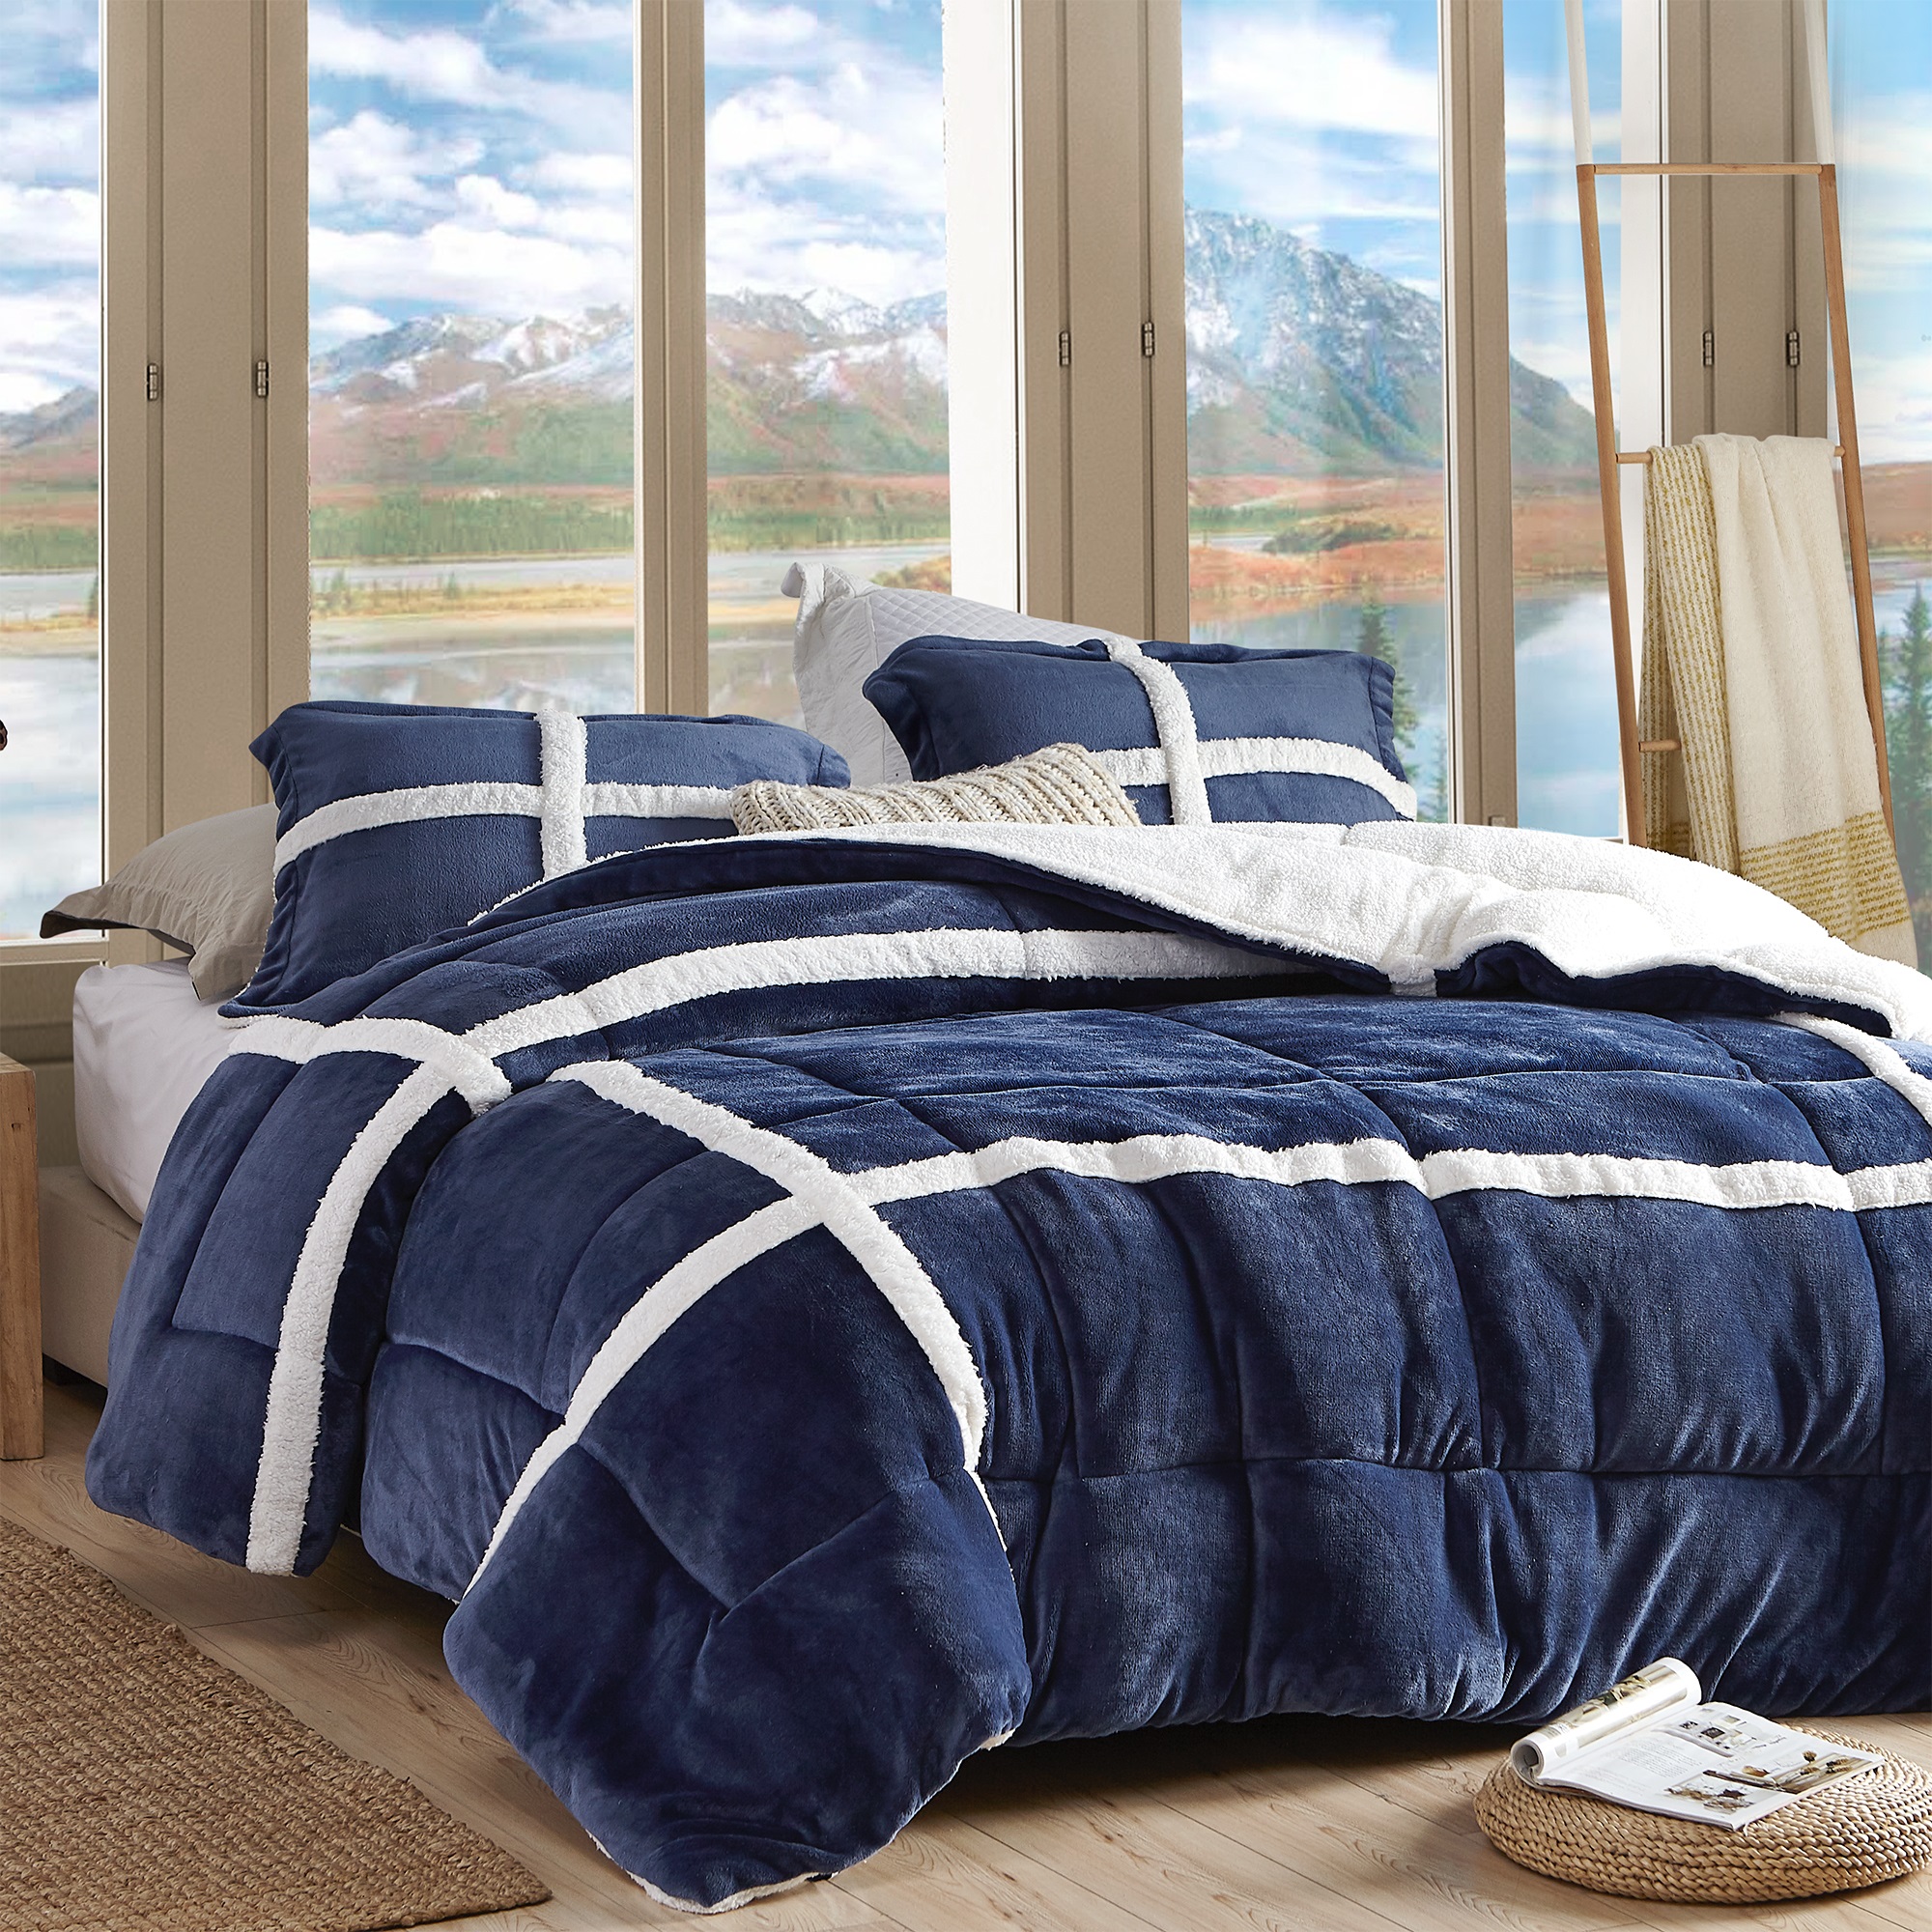 Coma Inducer® Oversized Comforter - Wilderness - Navy